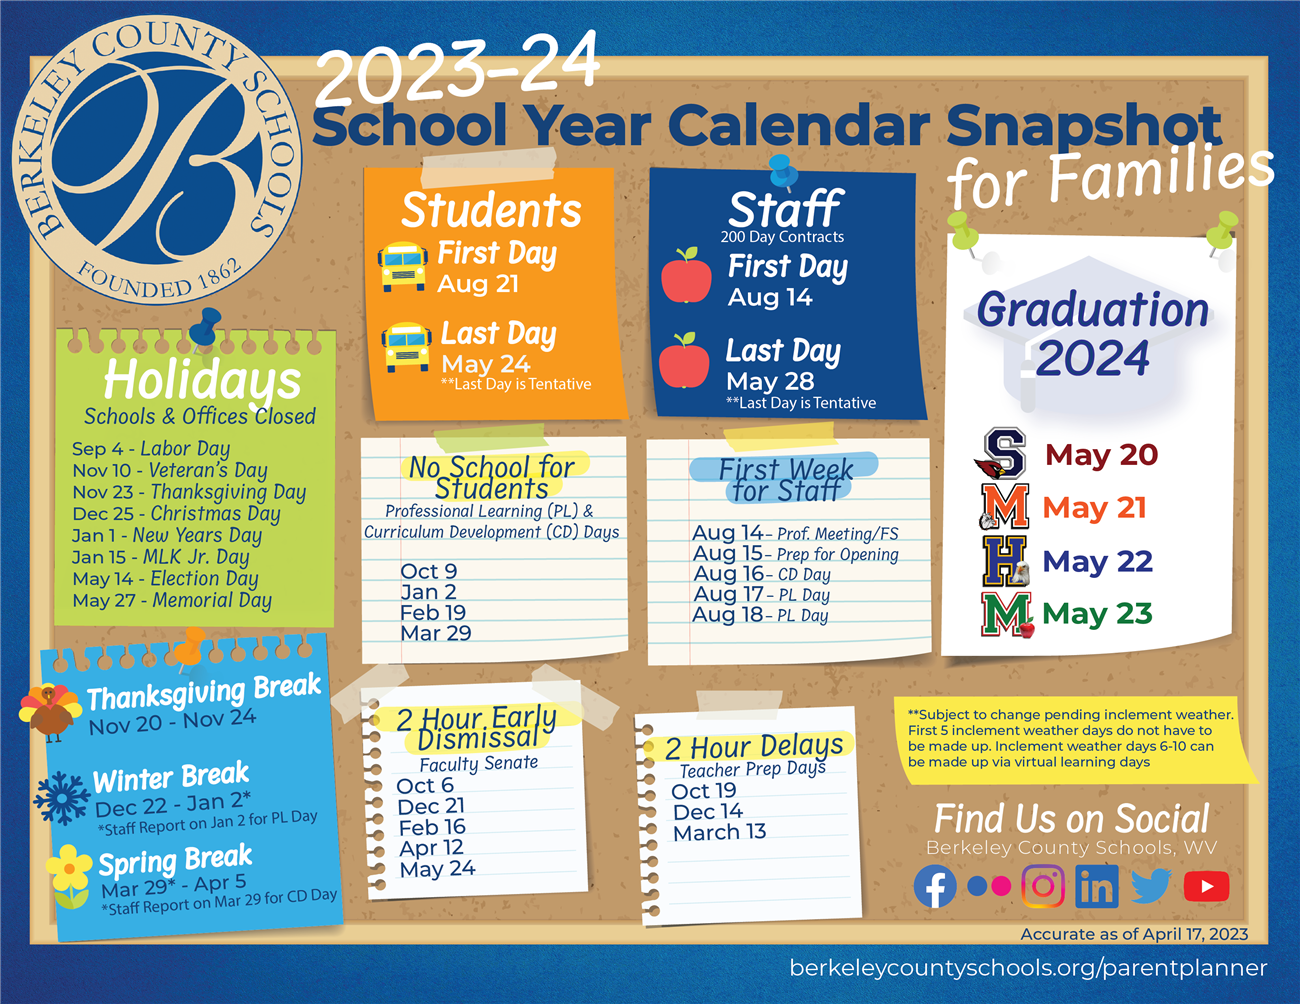 2023-24 School Year Calendar Snapshot: Link to District Calendar https://www.berkeleycountyschools.org/events/?start_date=2023-08-01&end_date=2023-08-31